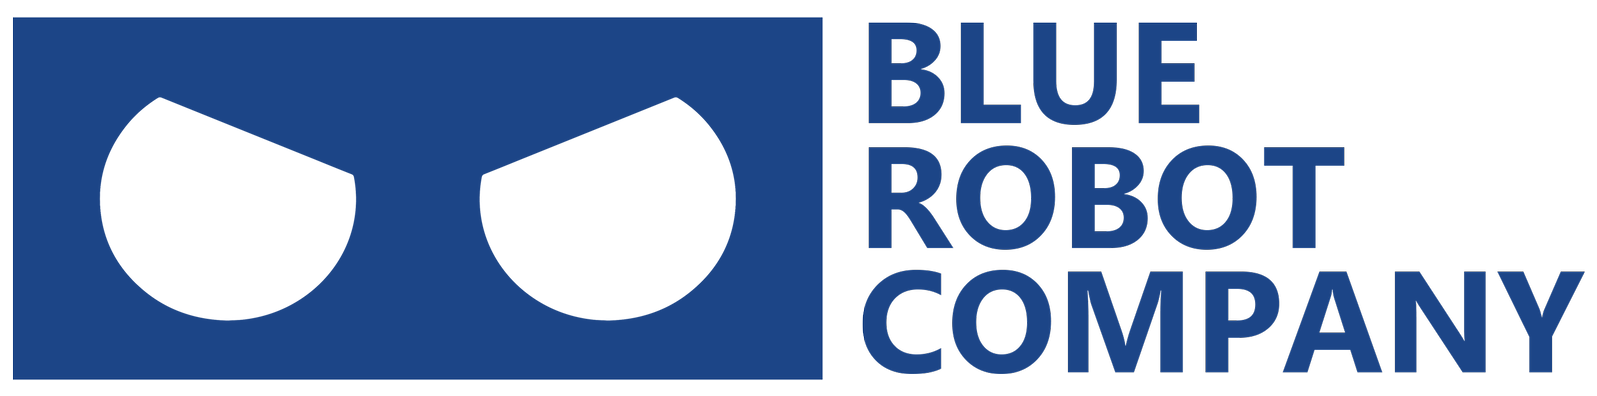 Blue Robot logo